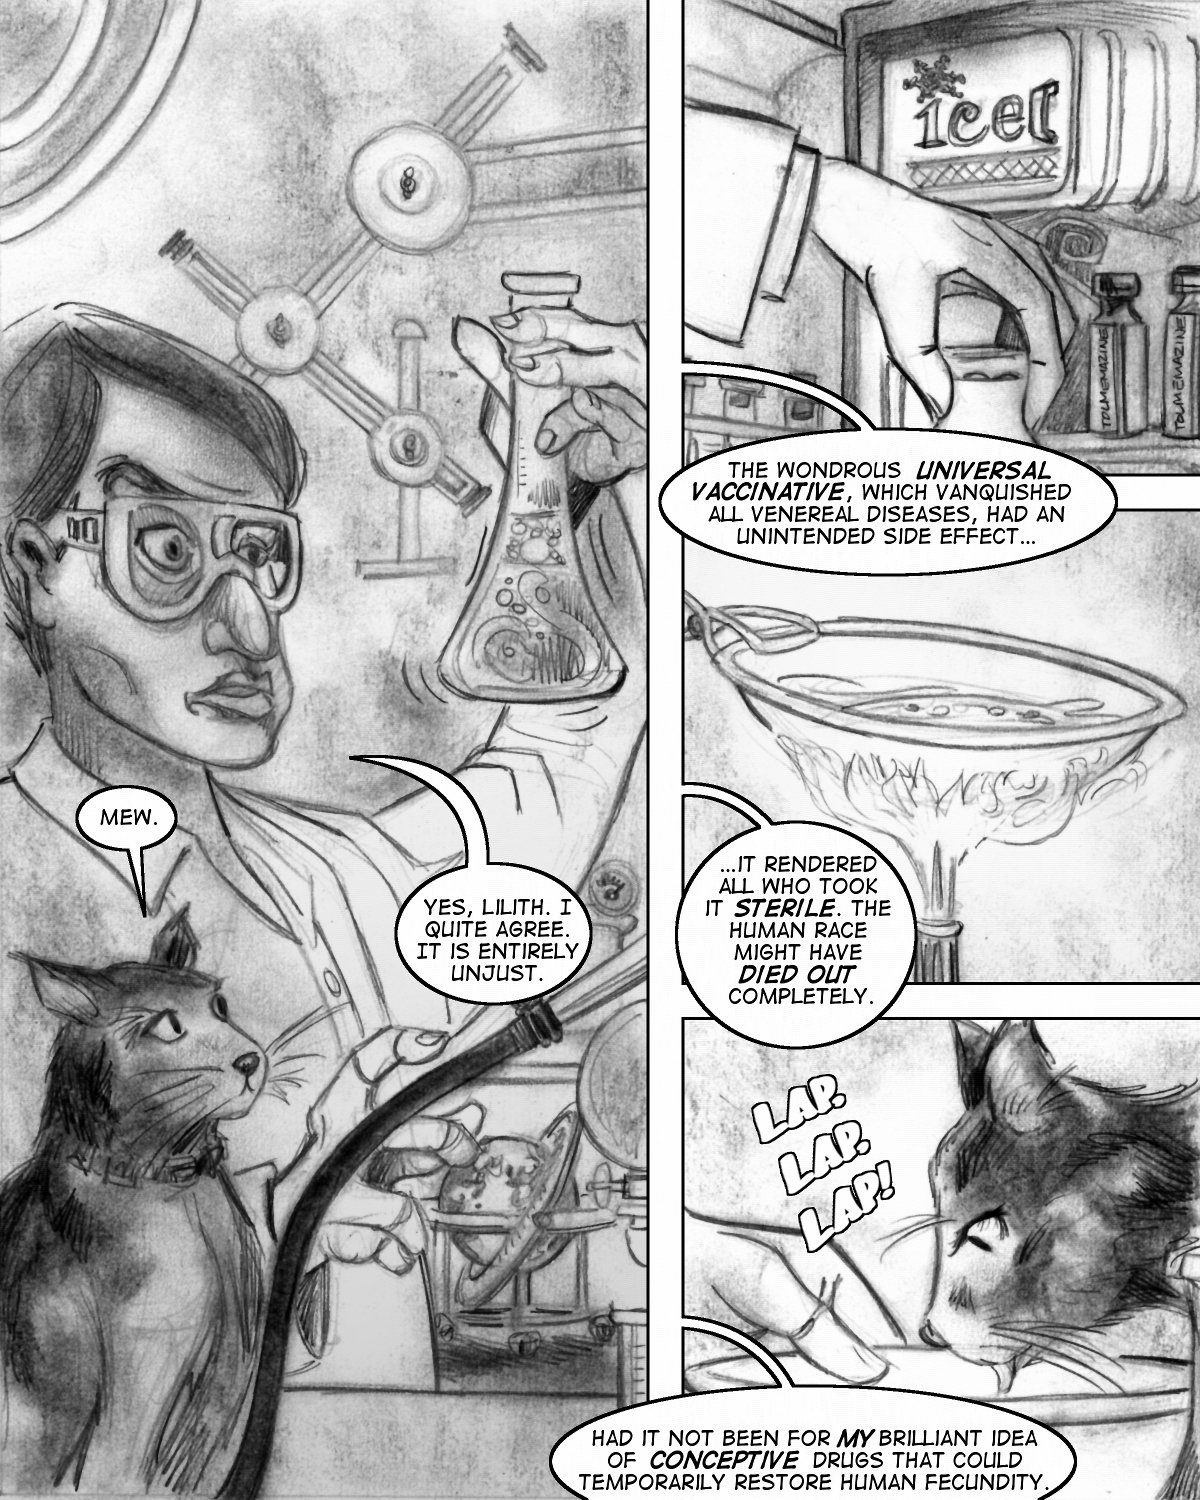 Mad scientist Emil Strangeways rants in his laboratory.